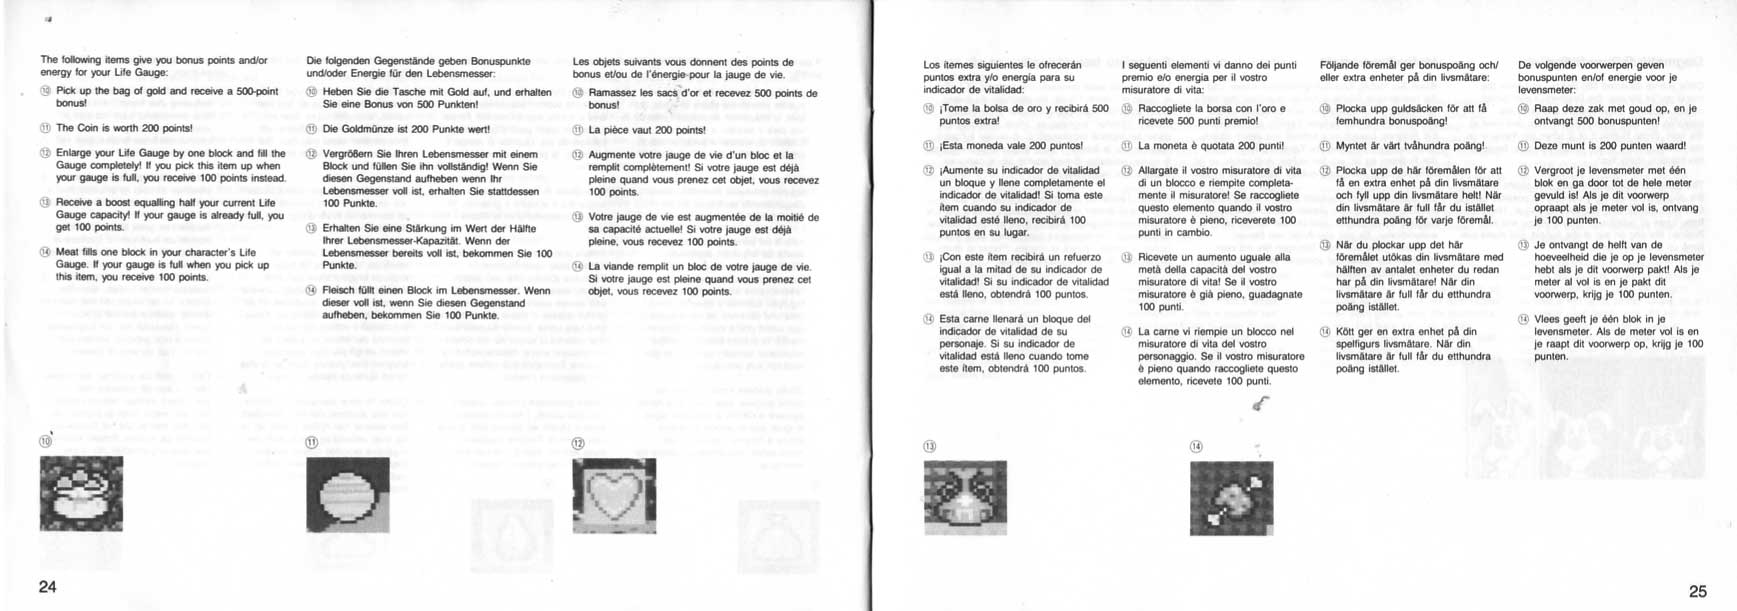 Astérix Jeux Master System Notice page 24-25